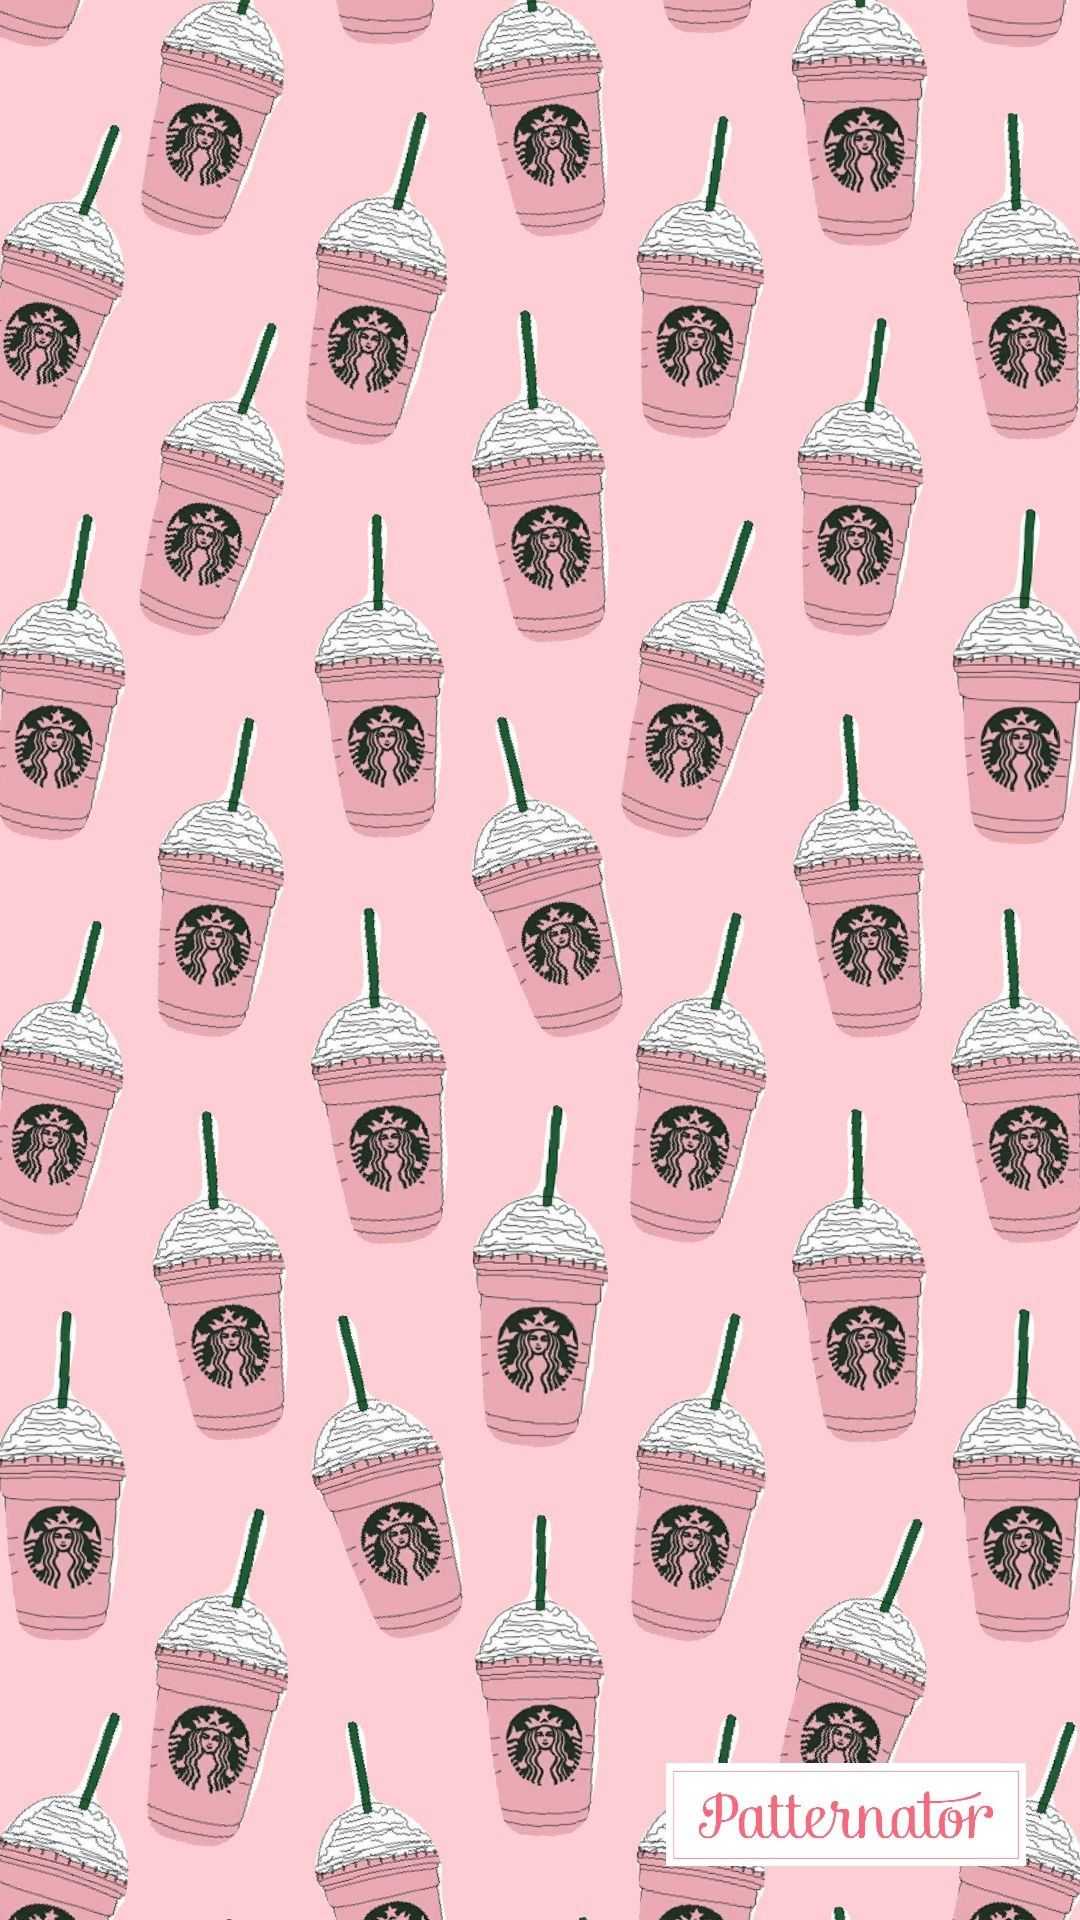 Starbucks Cute Wallpaper